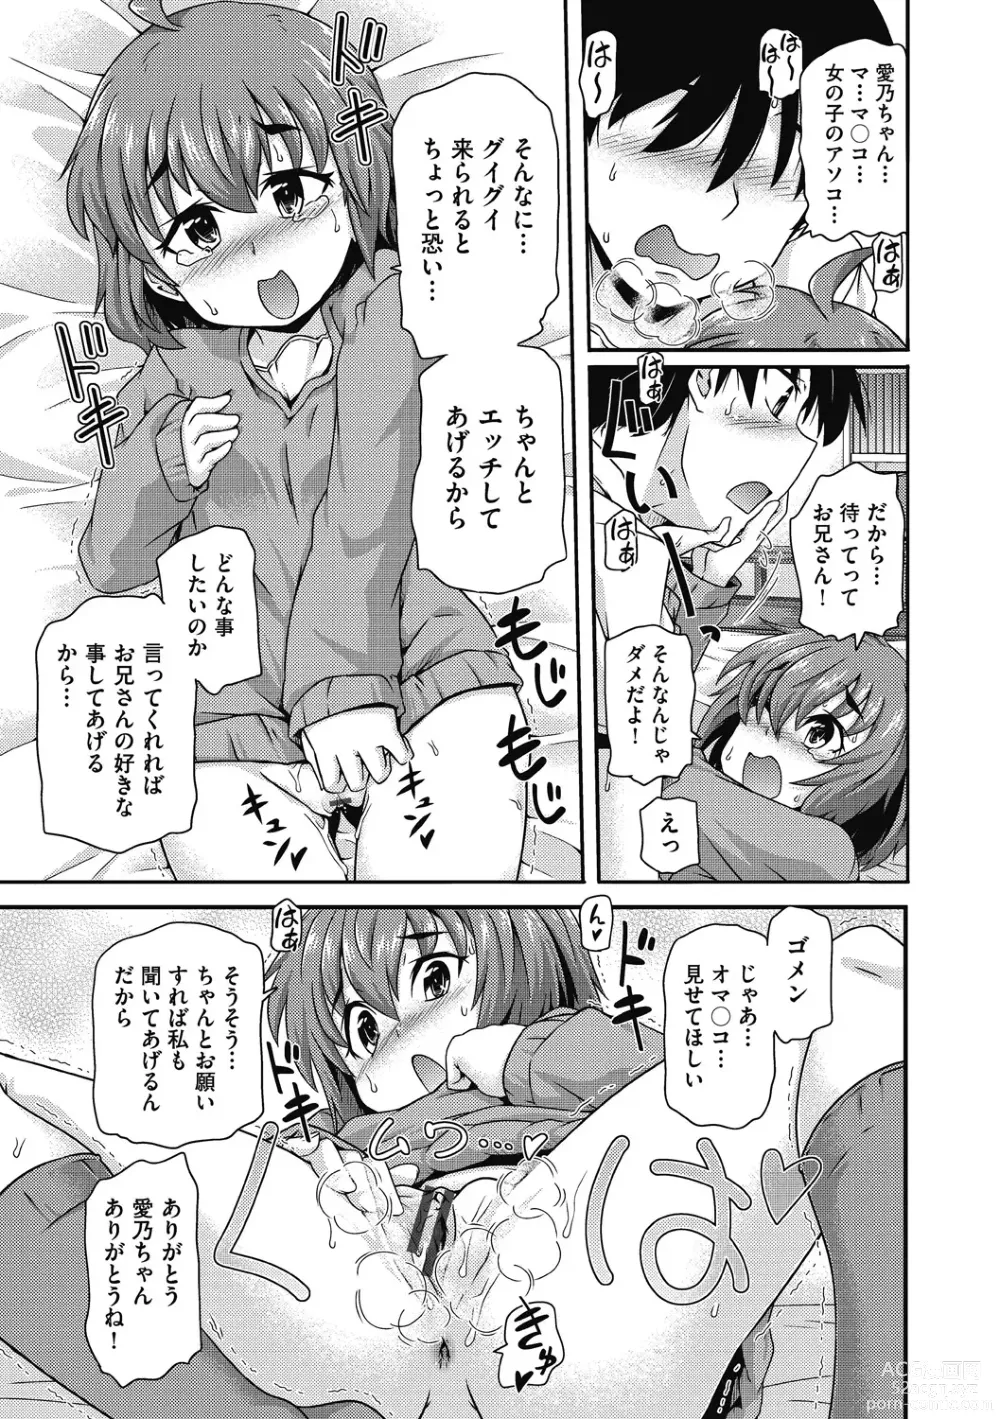 Page 27 of manga Chiisame Vacance